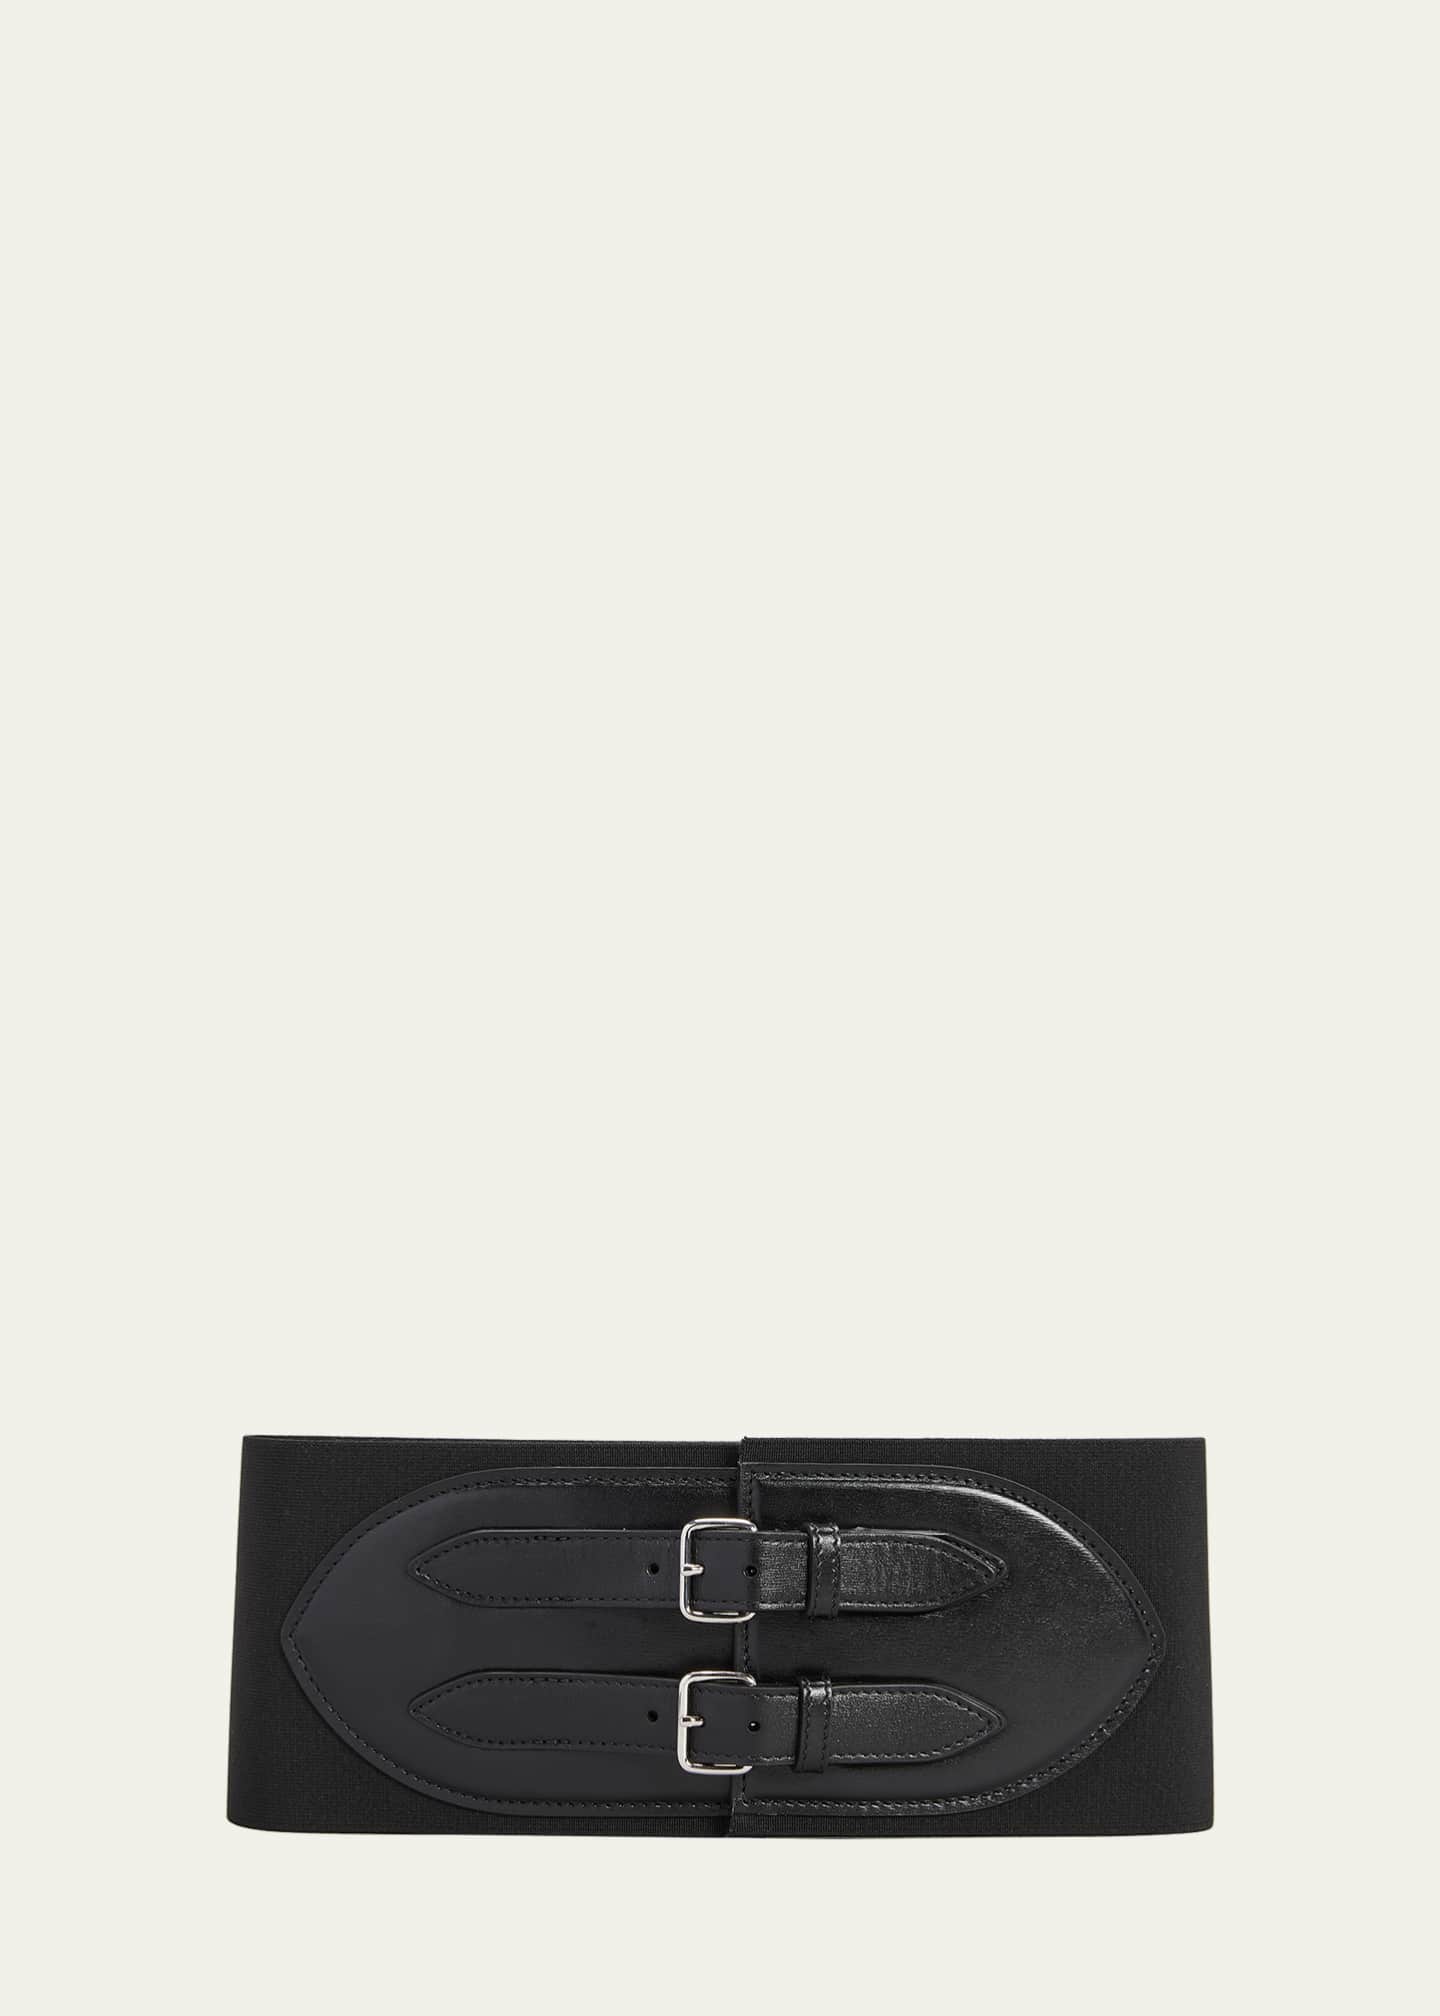 Gucci Elastic Leather Wallet, Black - Bergdorf Goodman